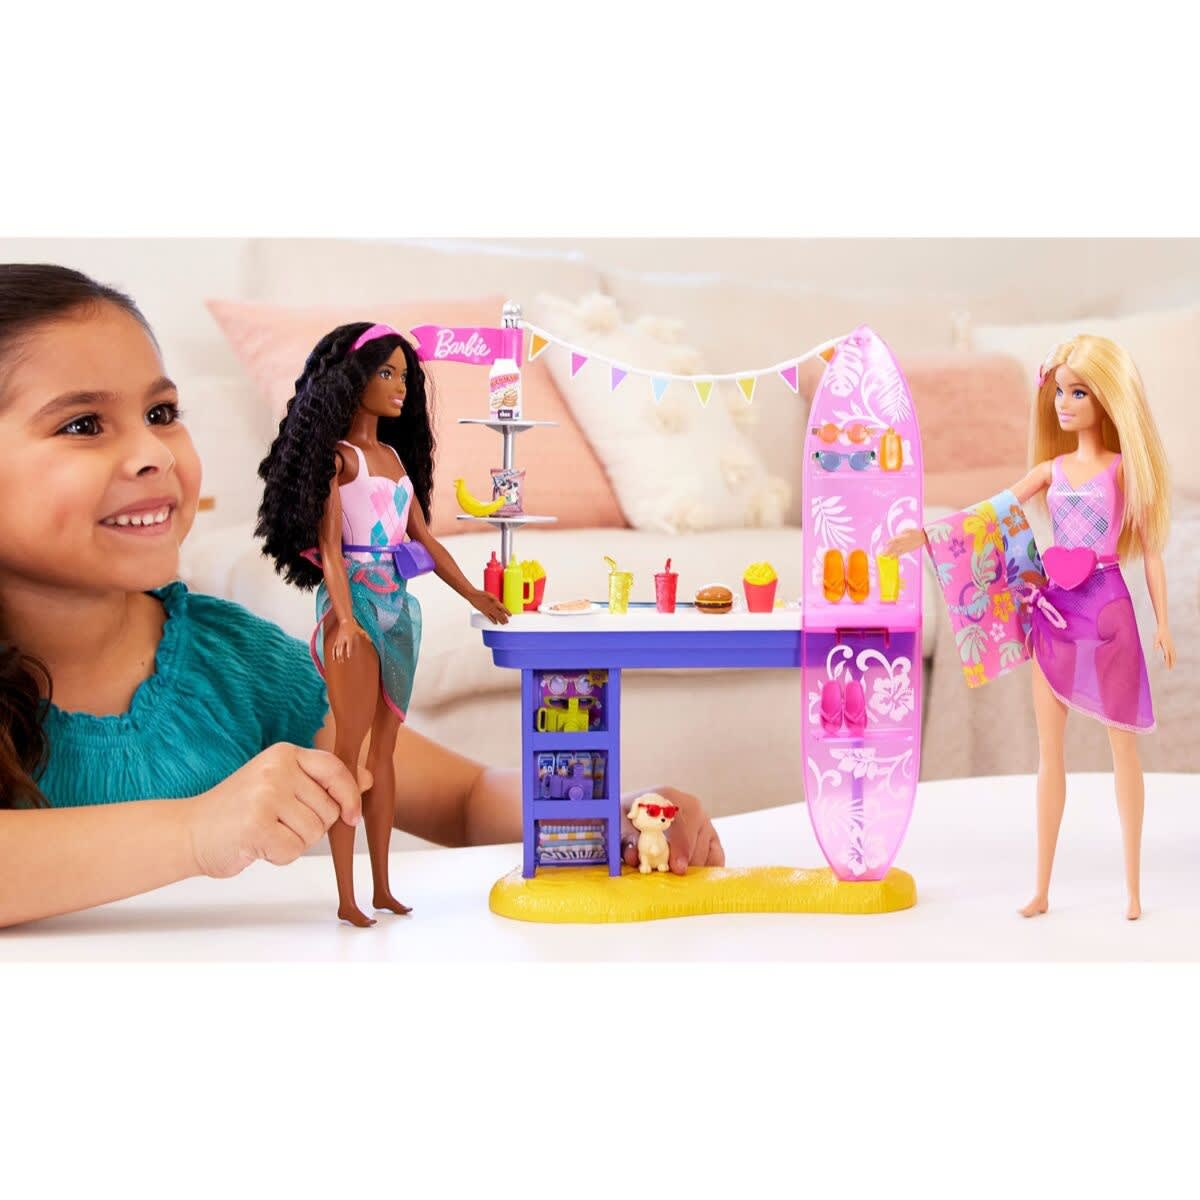 Barbie Beach Boardwalk Playset Kmart 6423